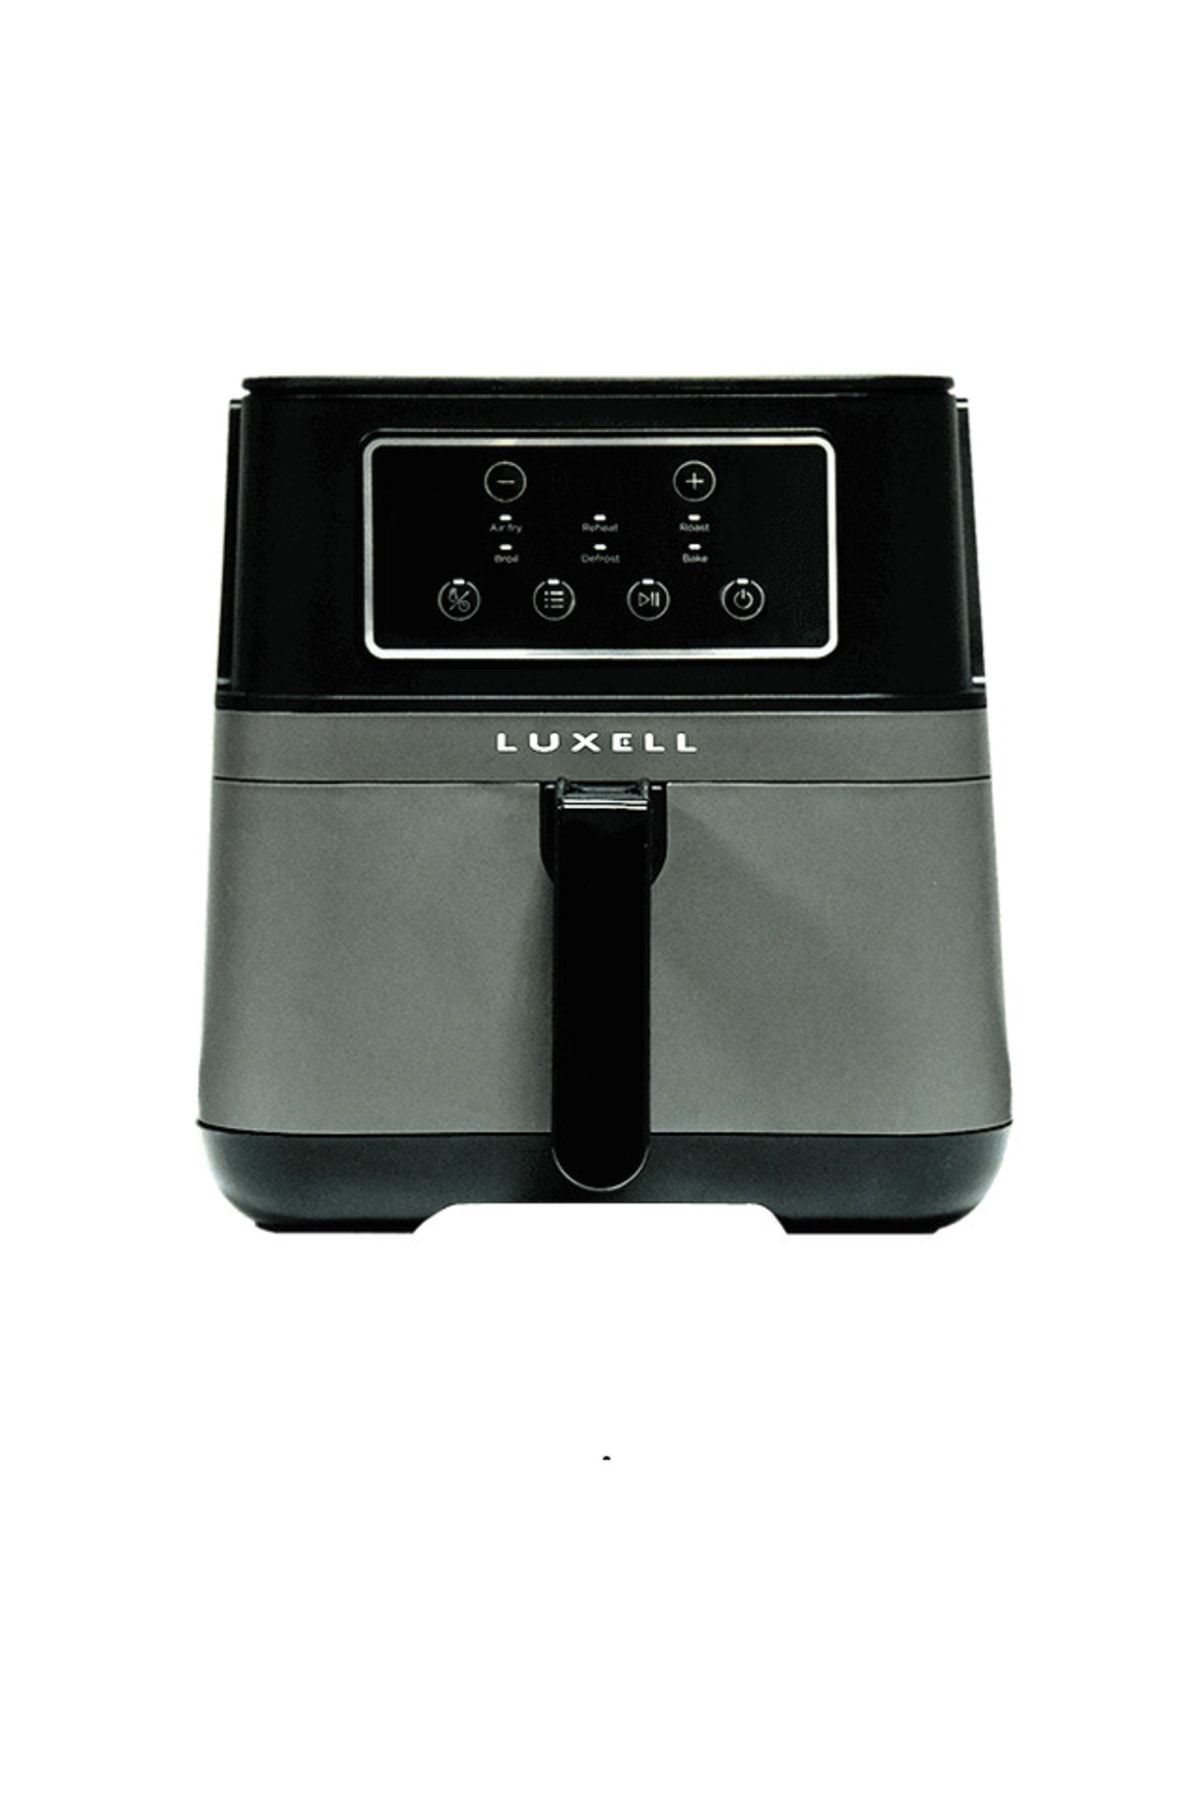 Luxell Orginal Lxaf-01 Fastfryer Yağsız Kızartma Pişirici Fritöz Makinesi